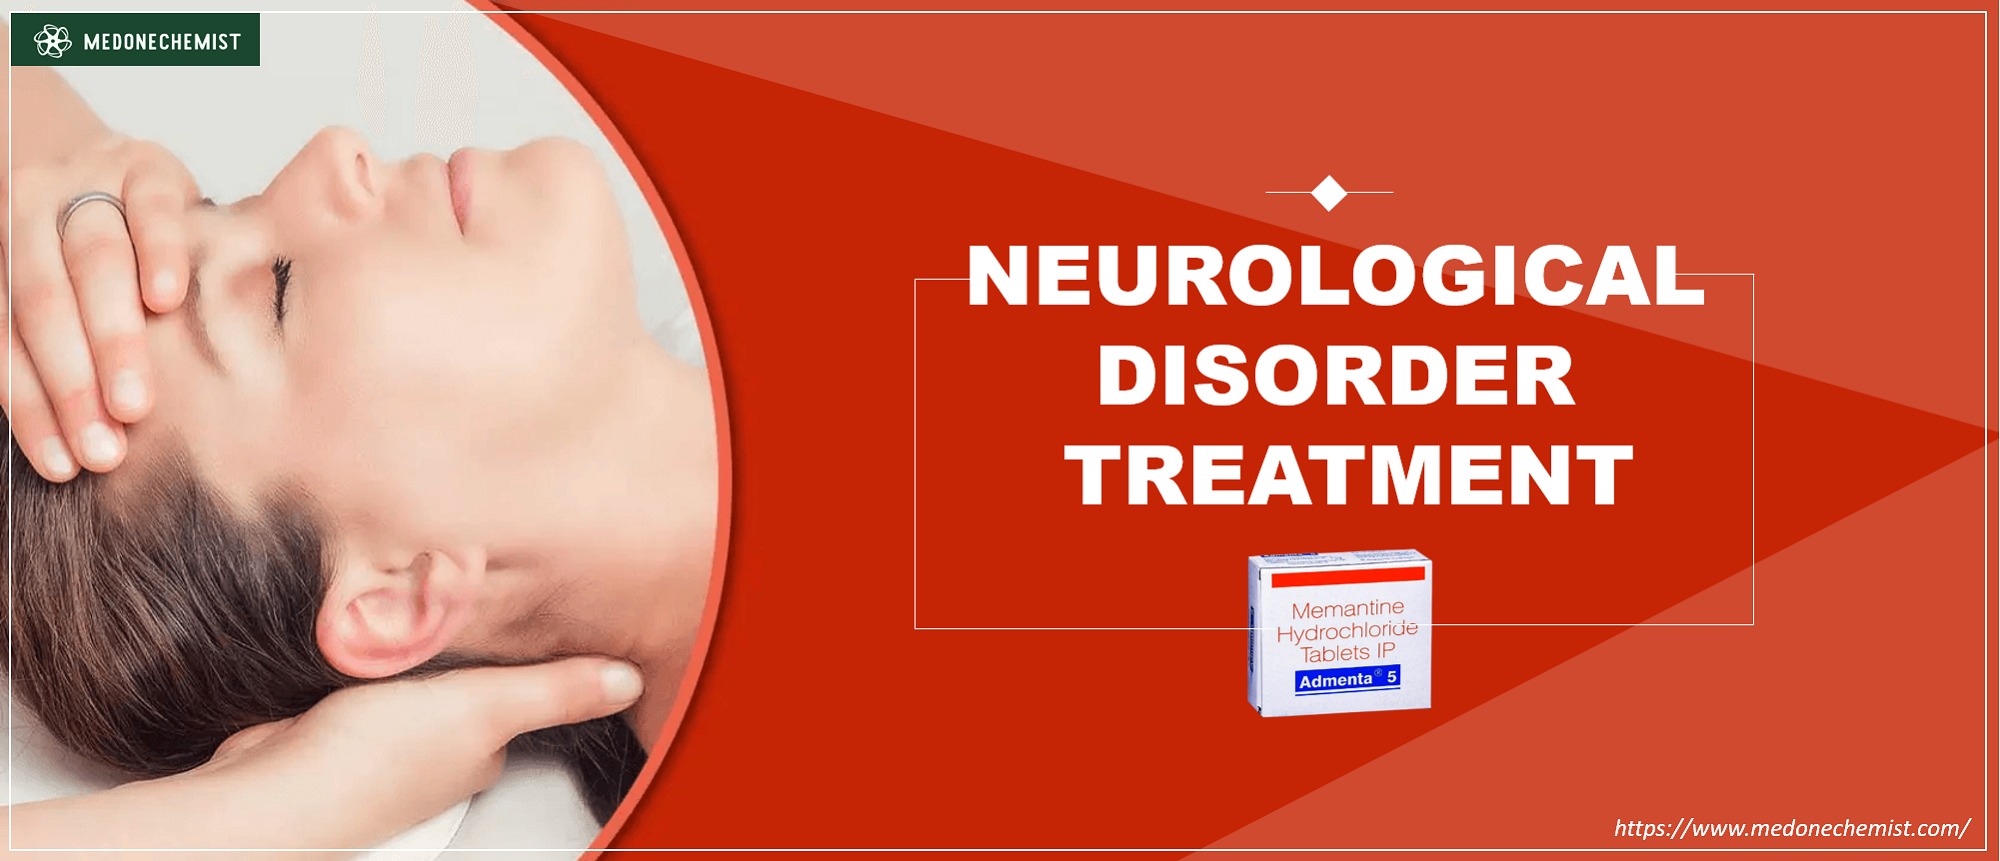 Neurological disorder treatment